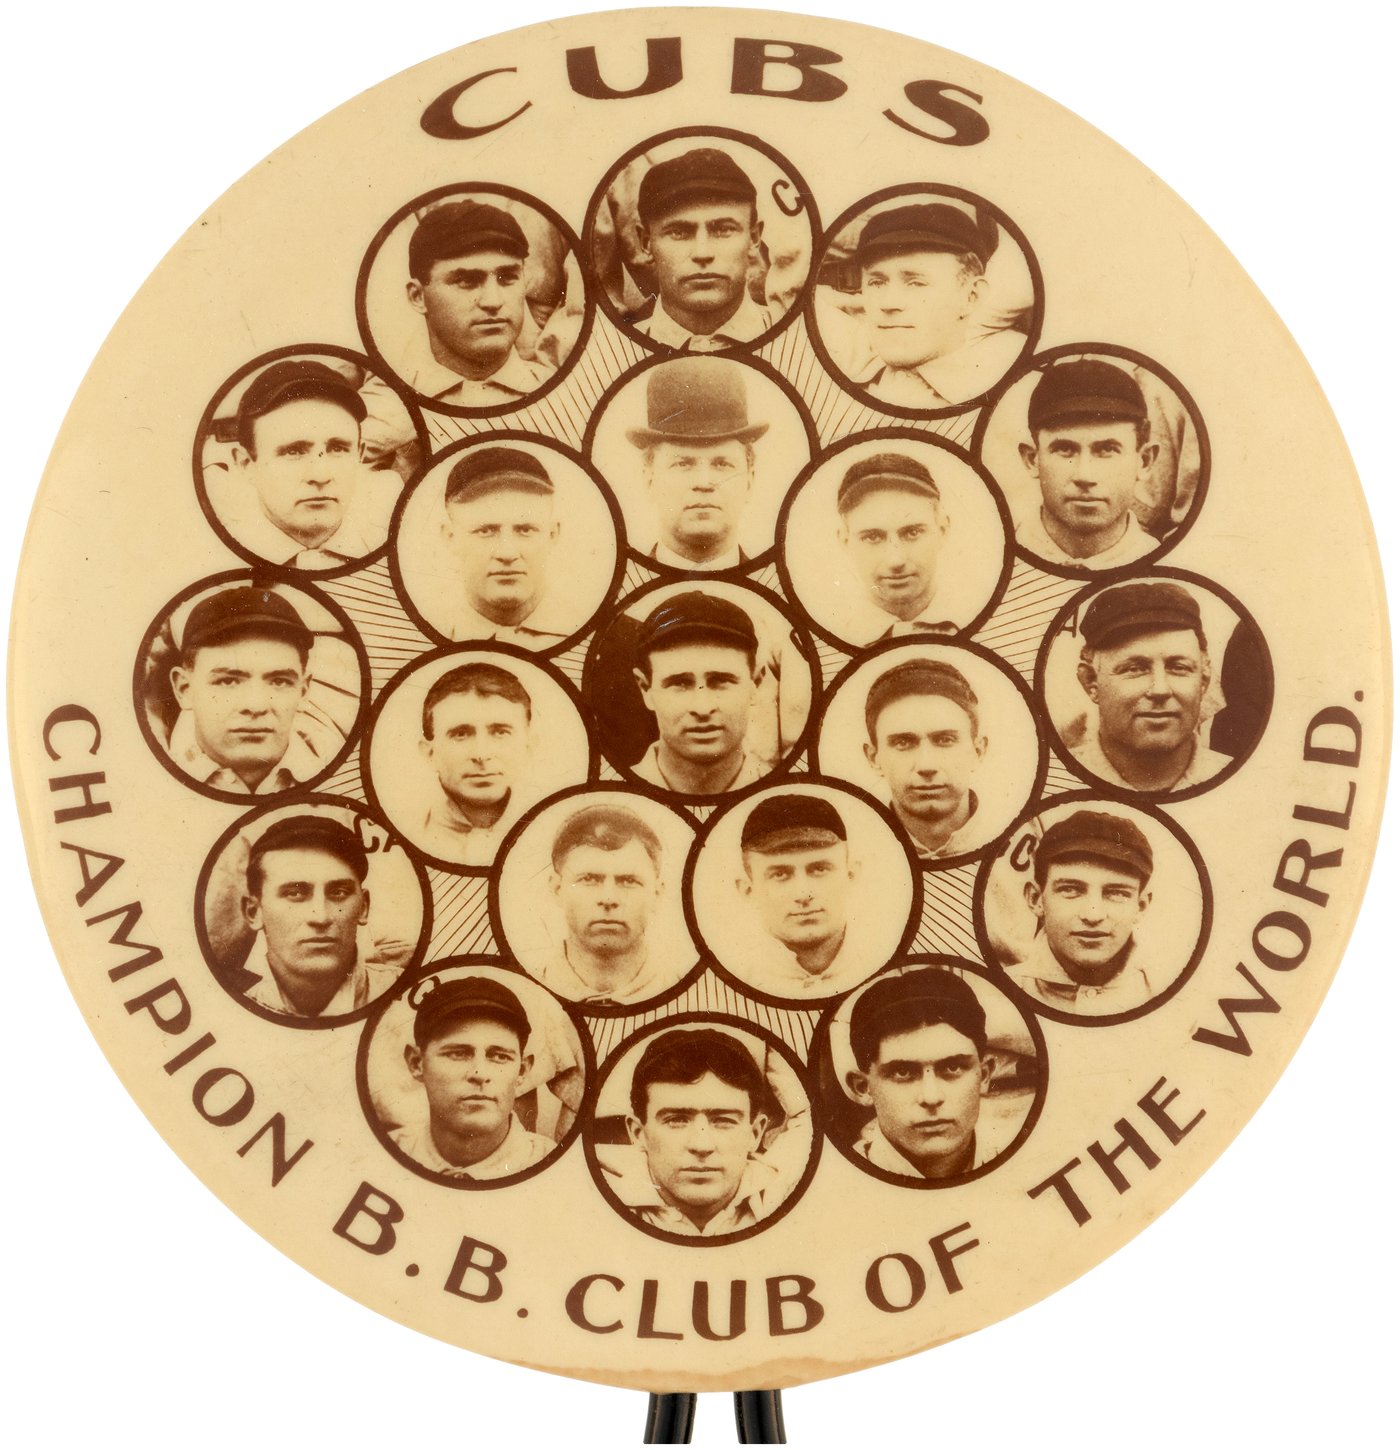 1906 World Series Commemorative Pin - White Sox vs. Cubs